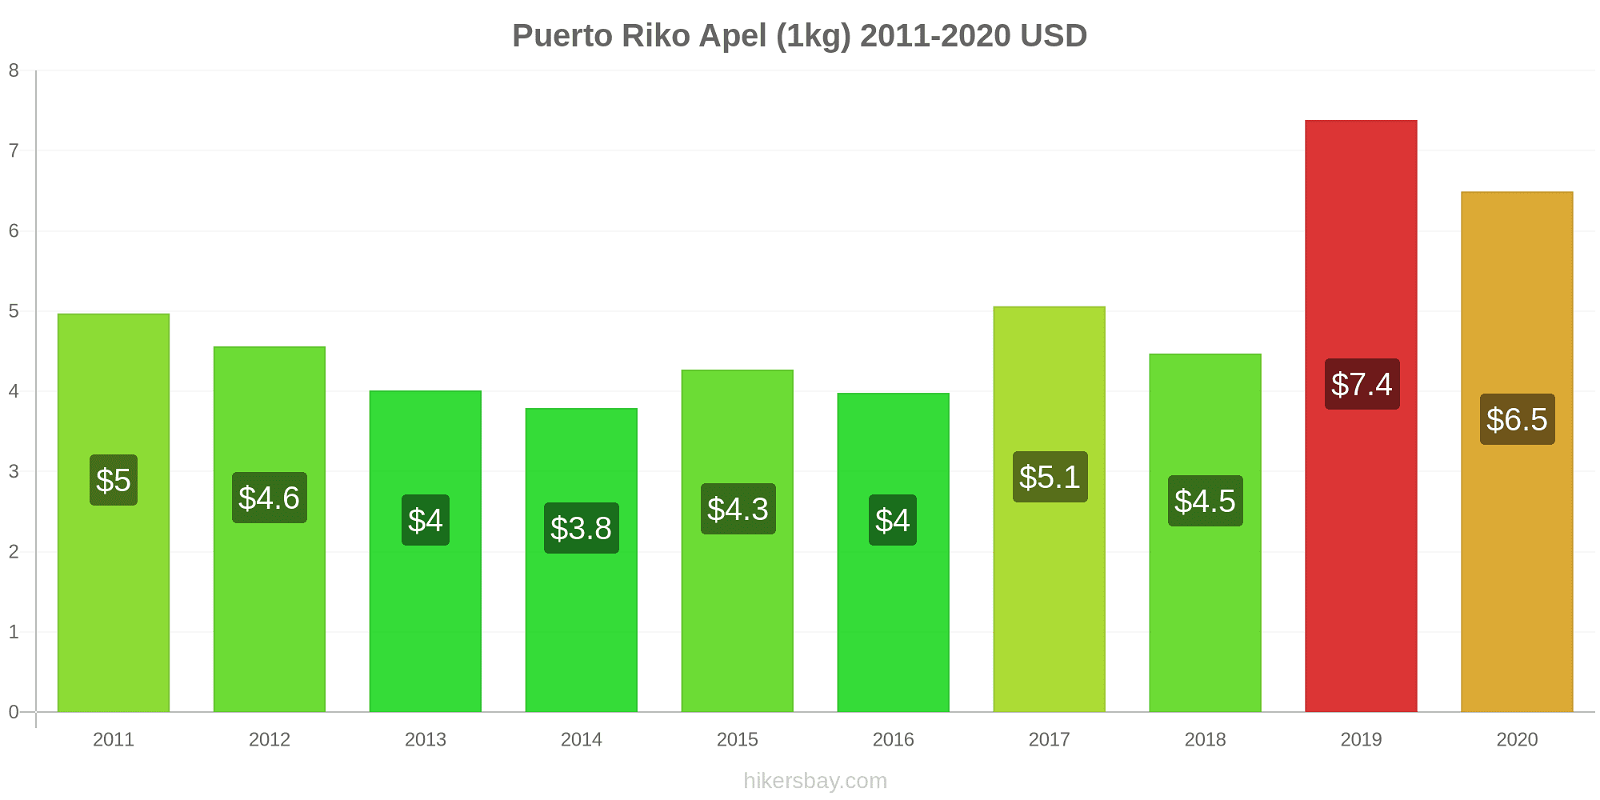 Puerto Riko perubahan harga Apel (1kg) hikersbay.com